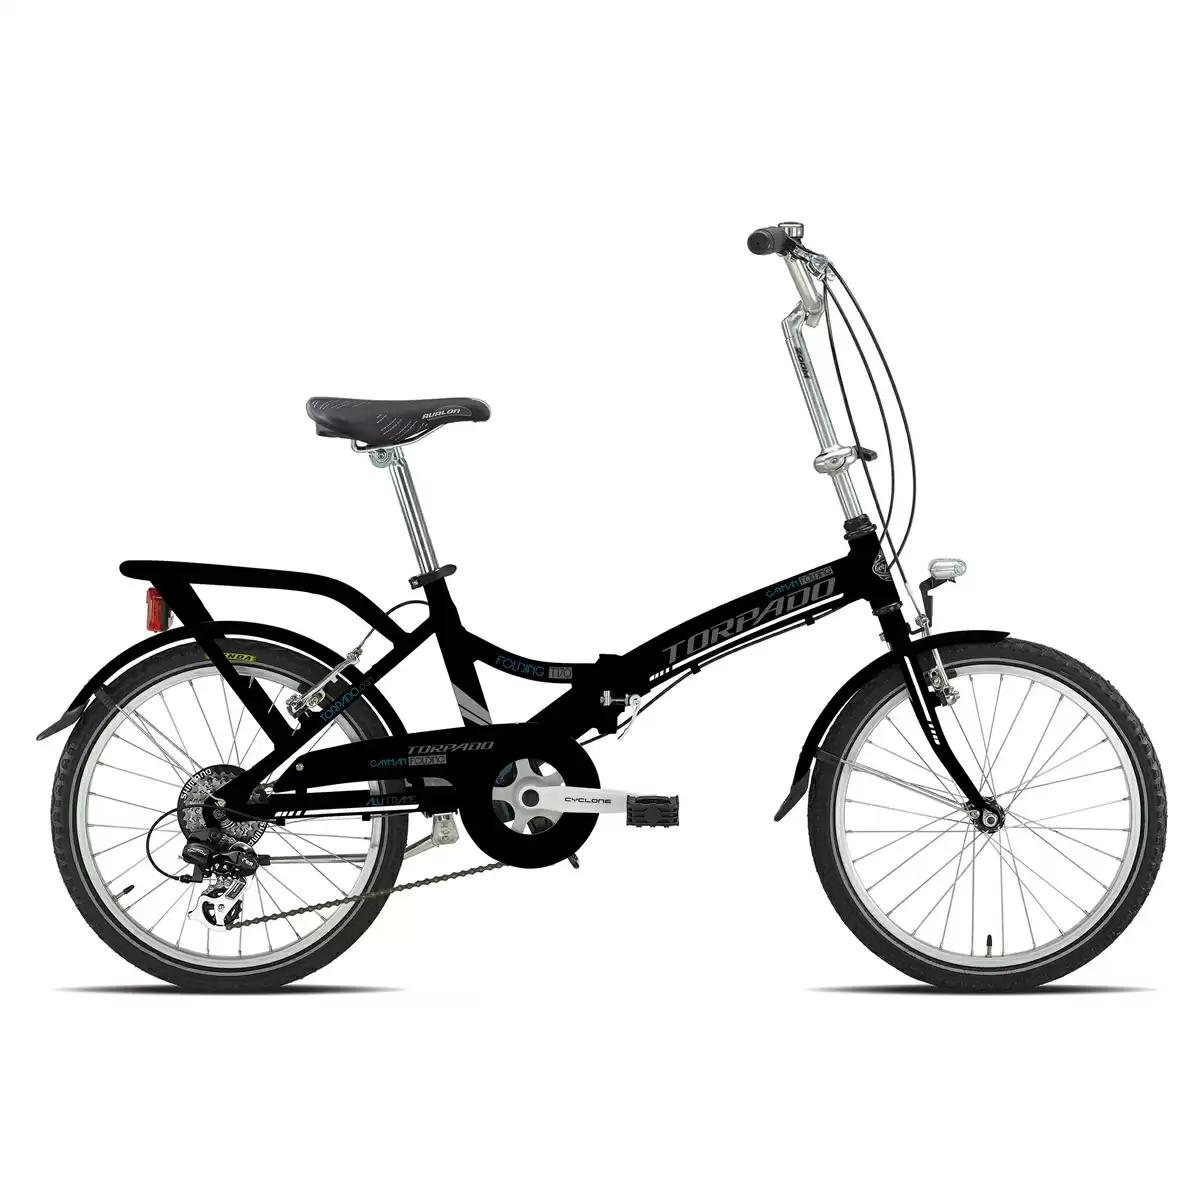 Bicicleta dobrável T170 Cayman 20'' alu 6s preta - image